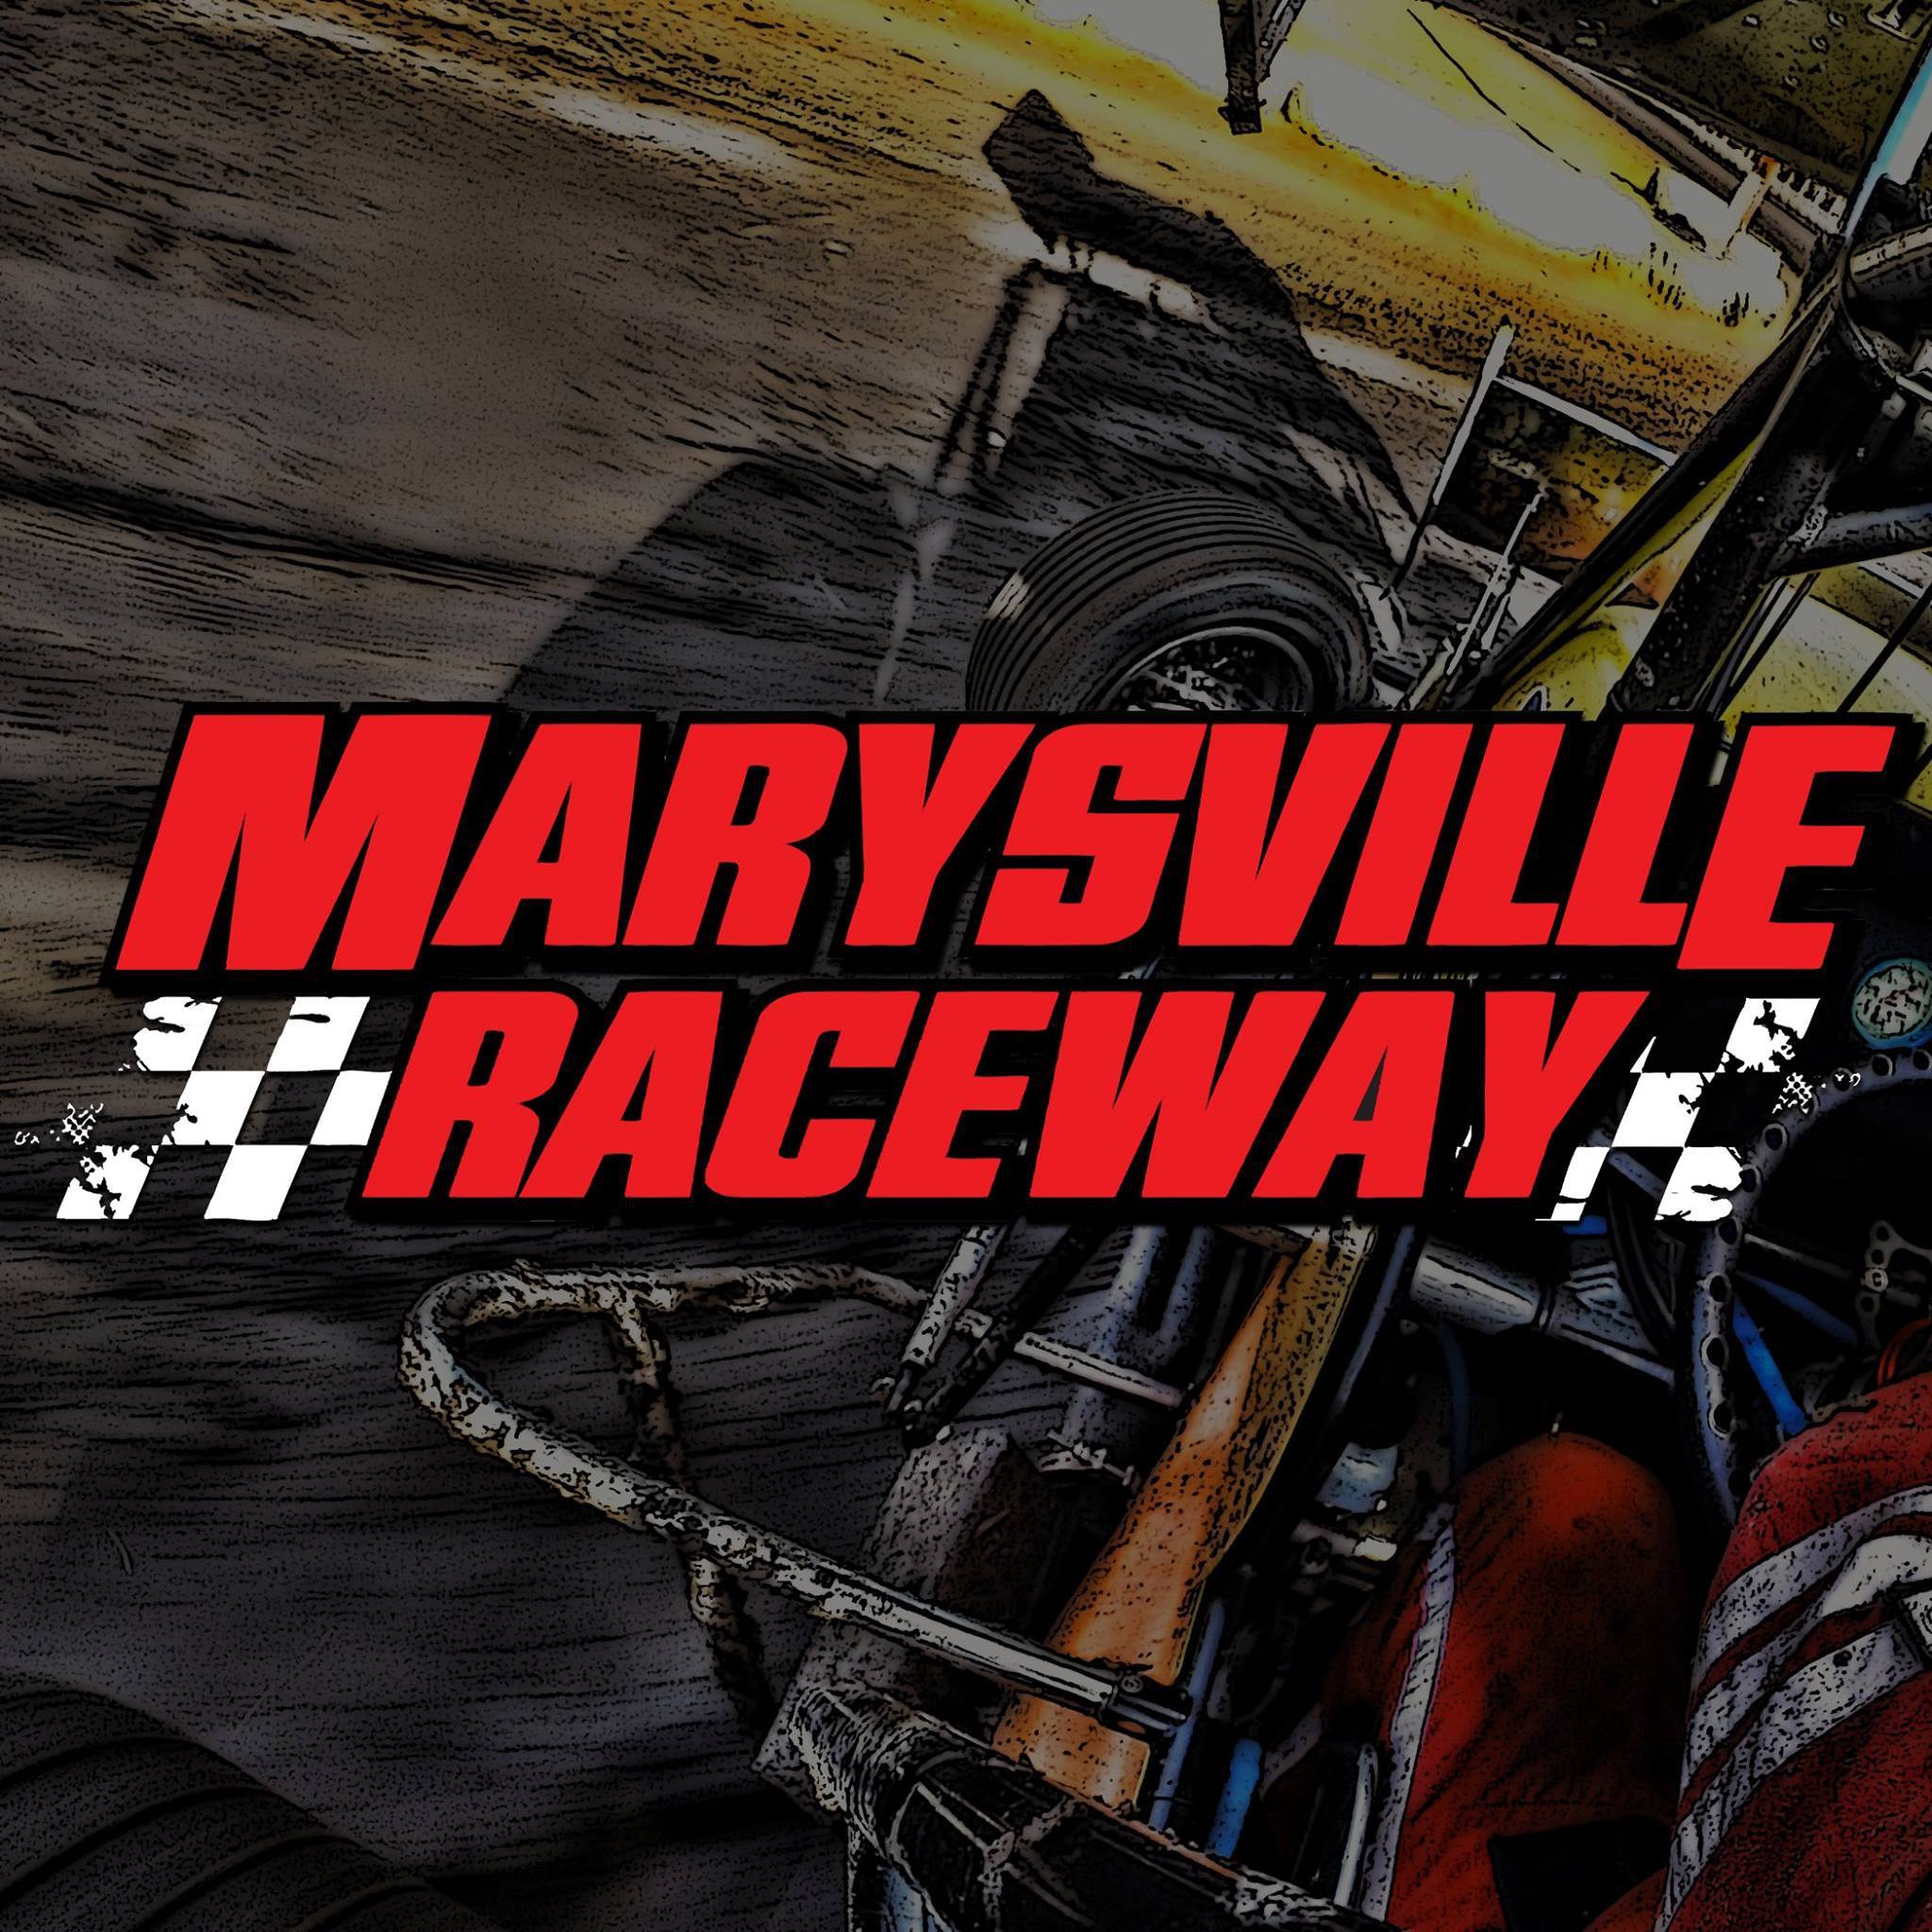 Marysville Raceway Park